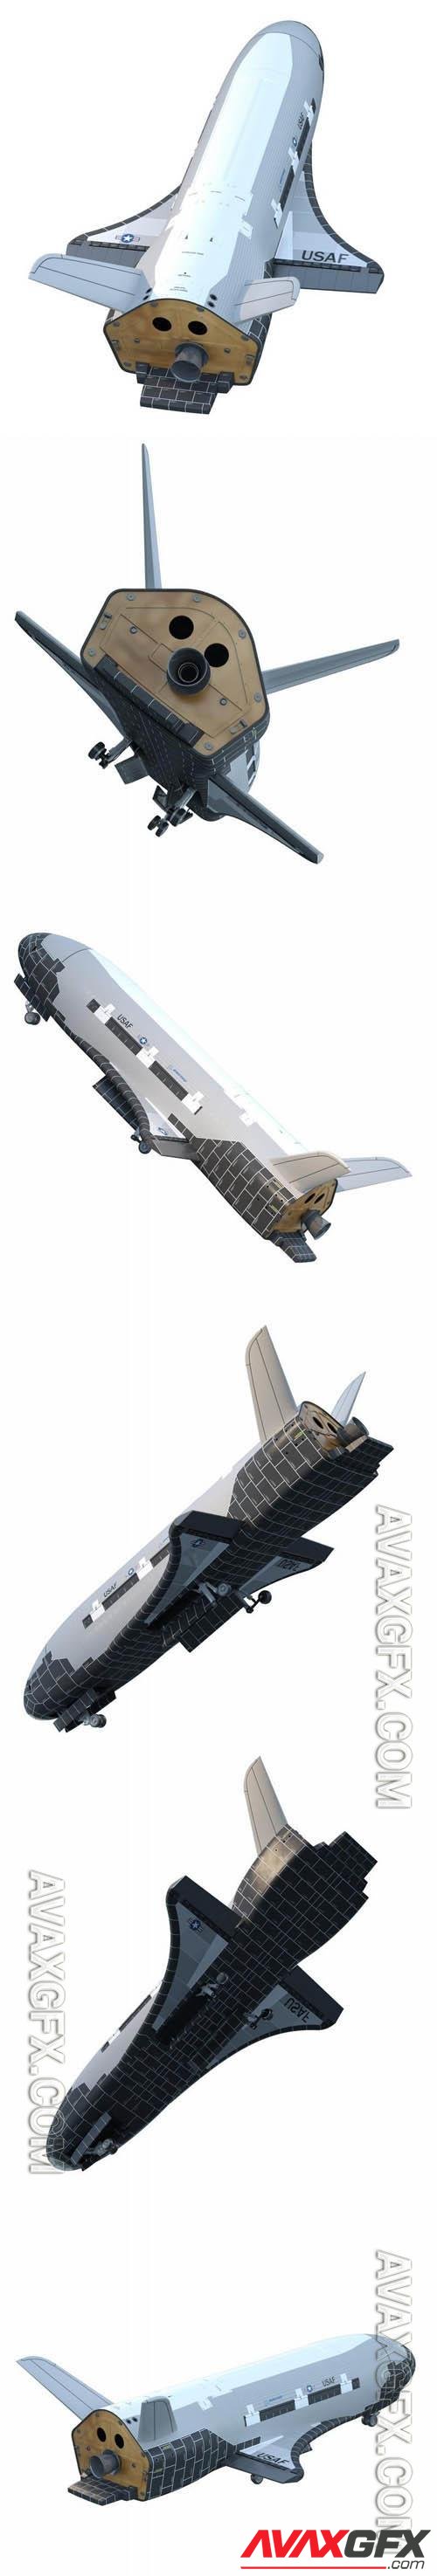 Boeing X-37b - 3d model | Download 3Ds Max Models